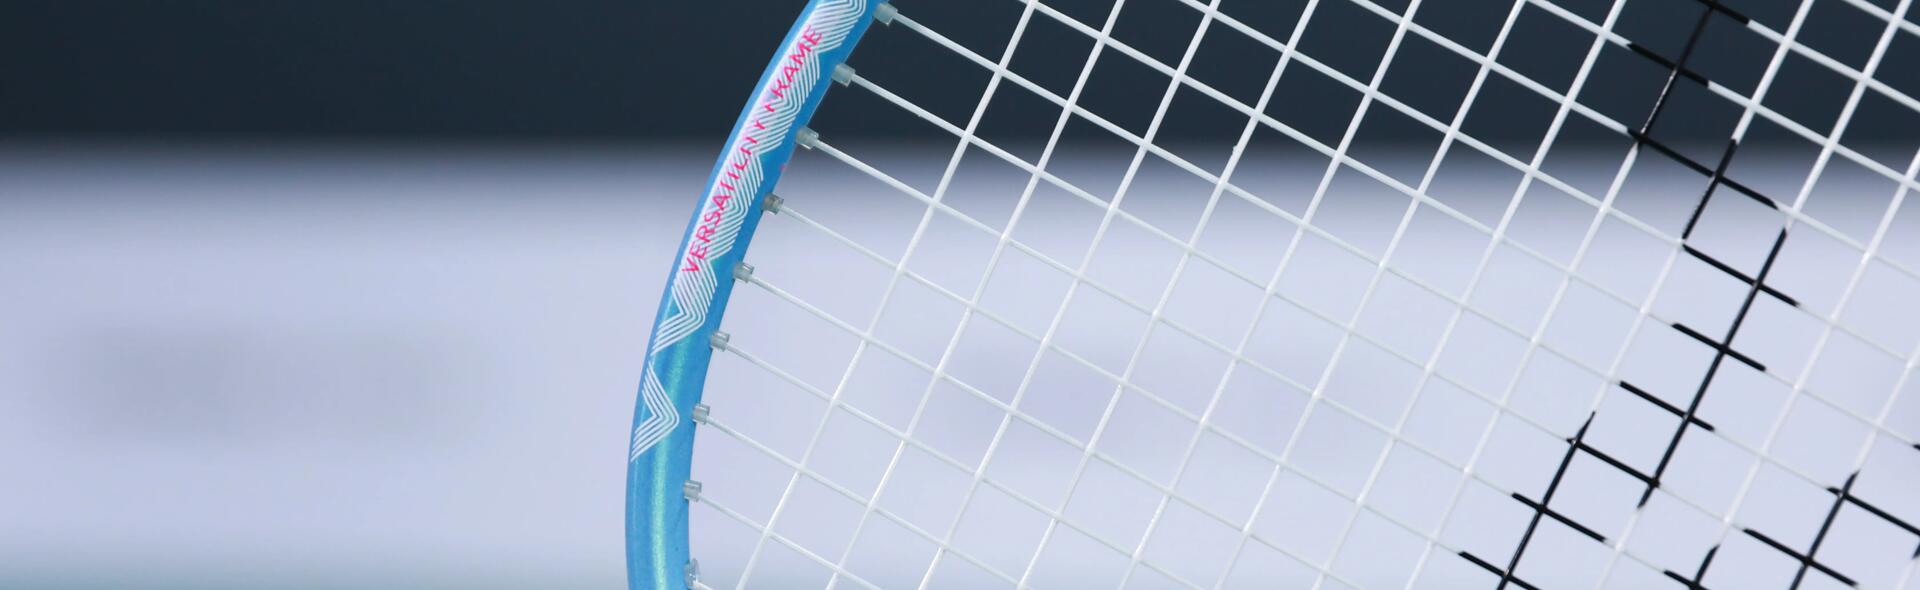 cc badmintonracket